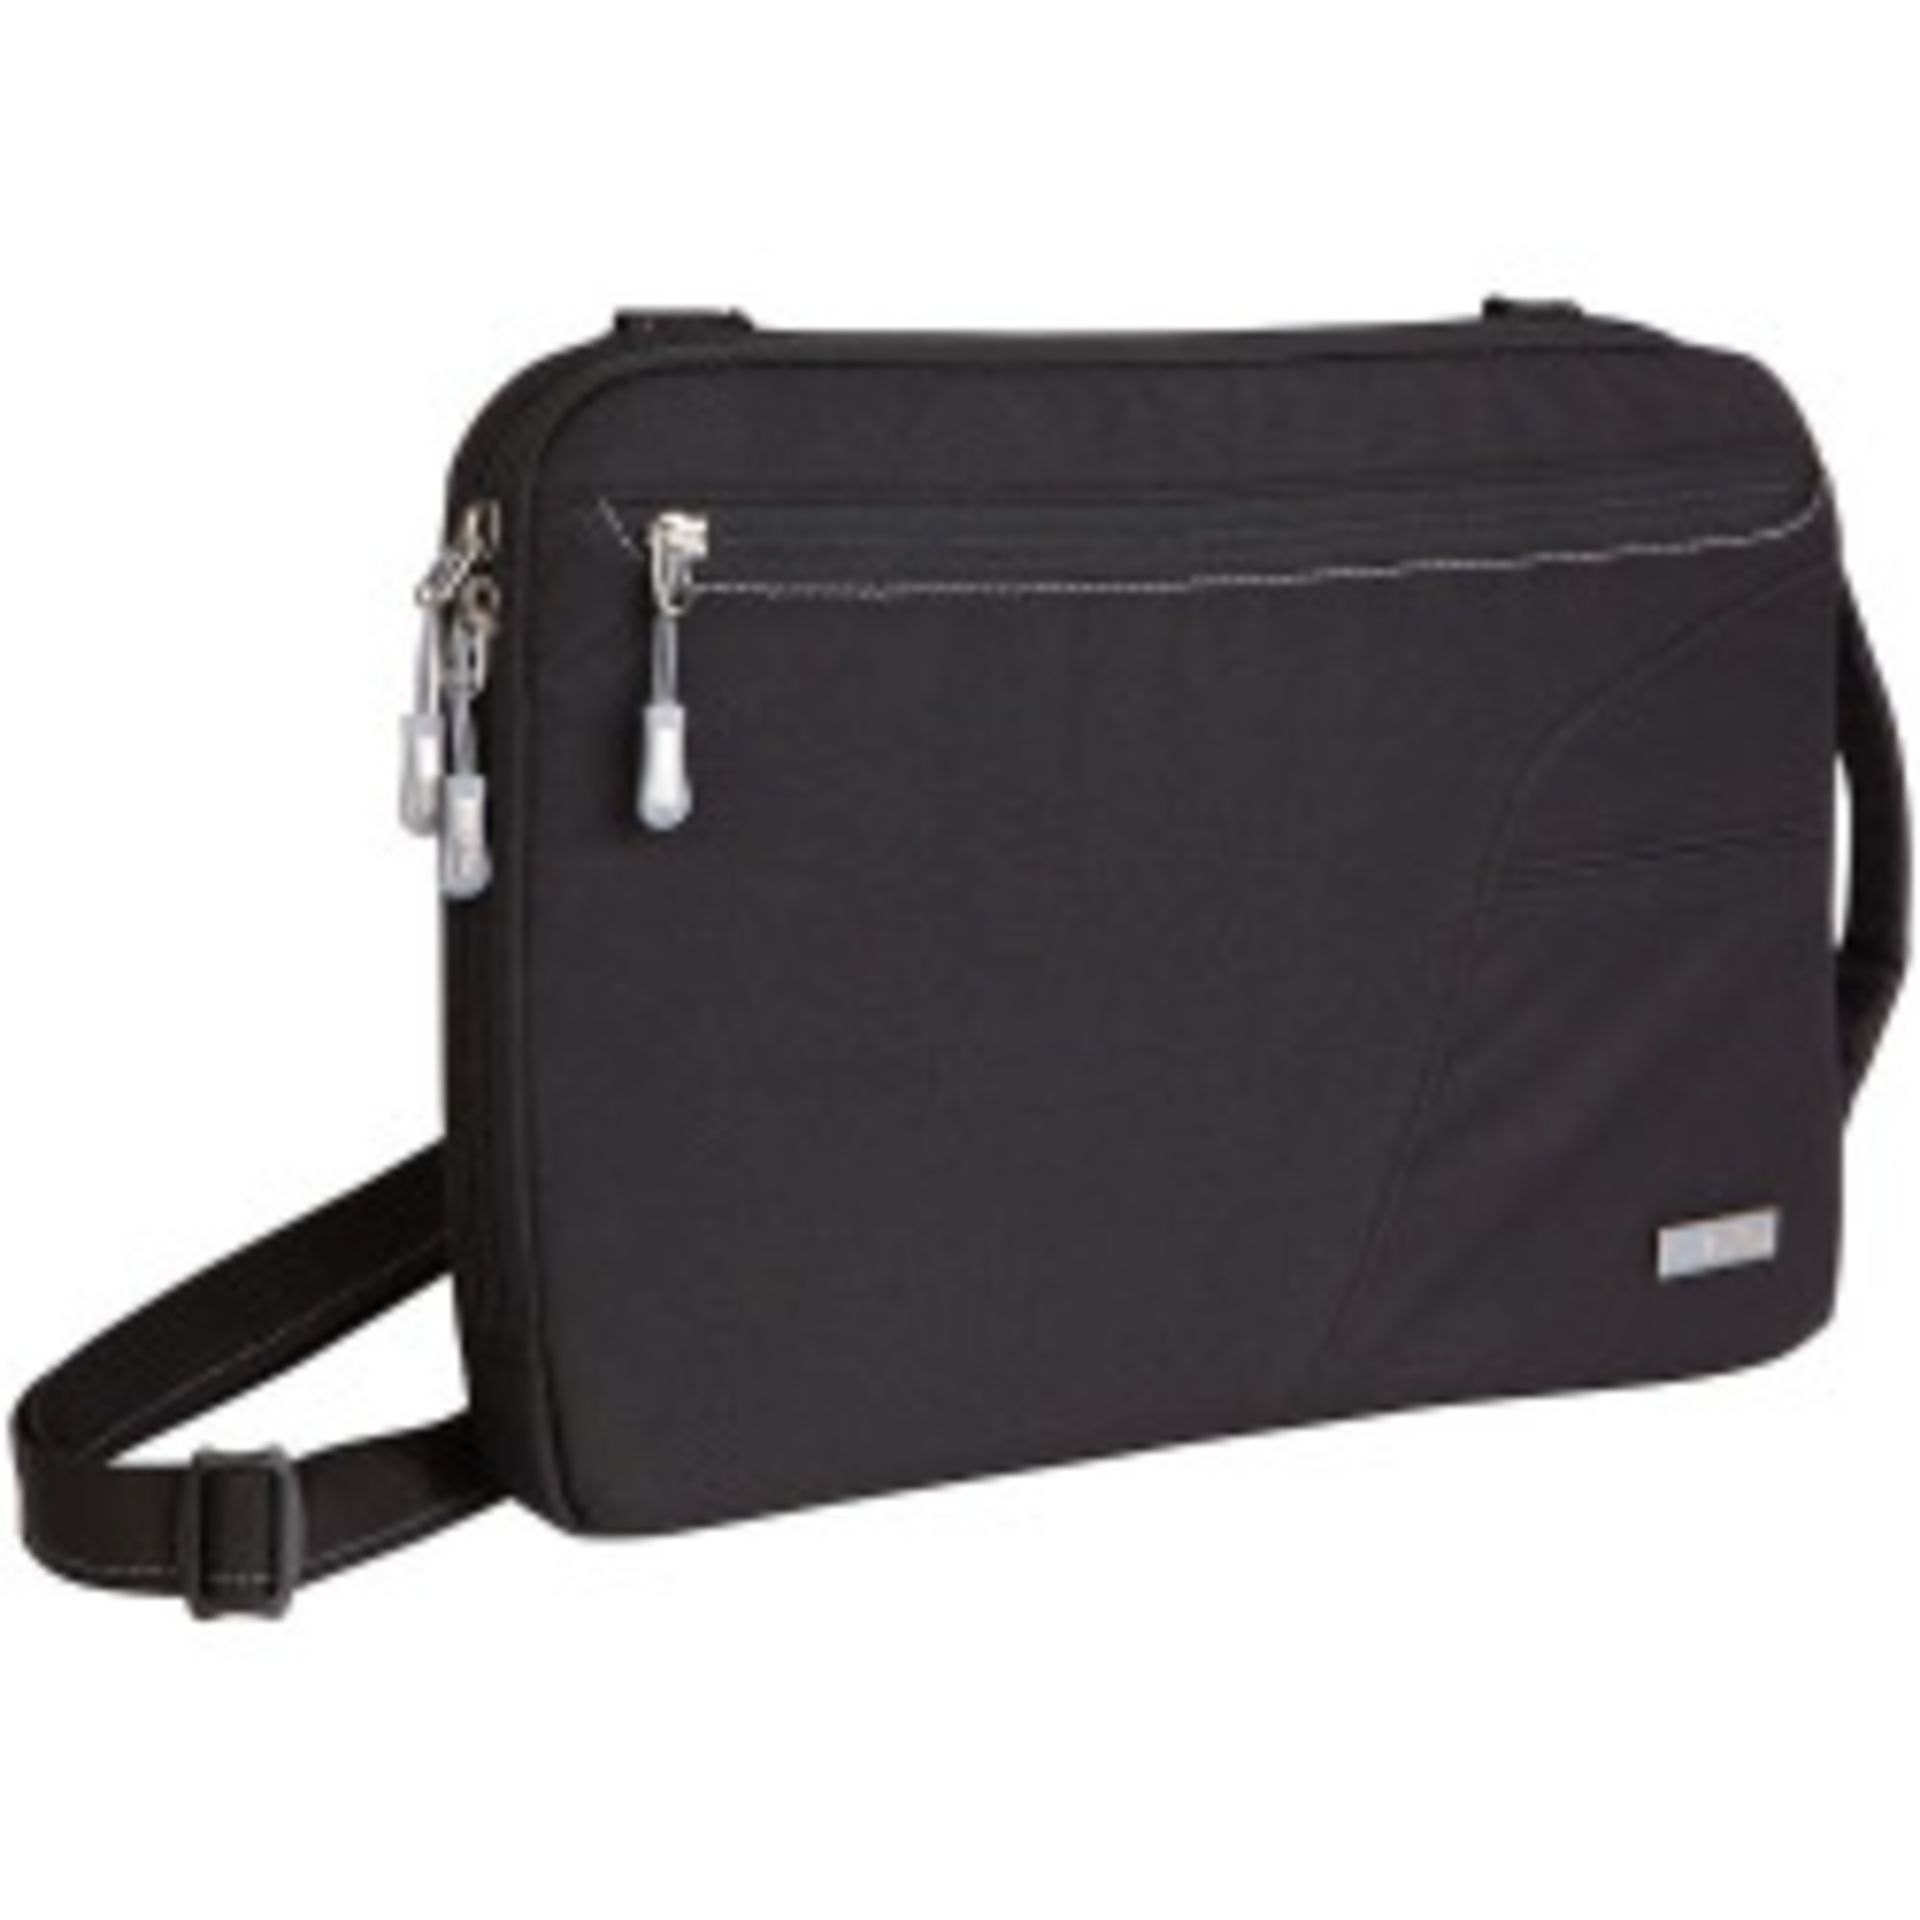 + VAT Brand New STM Blazer Padded Sleeve - Bag For Laptops And Tablets 11" Black With Removable